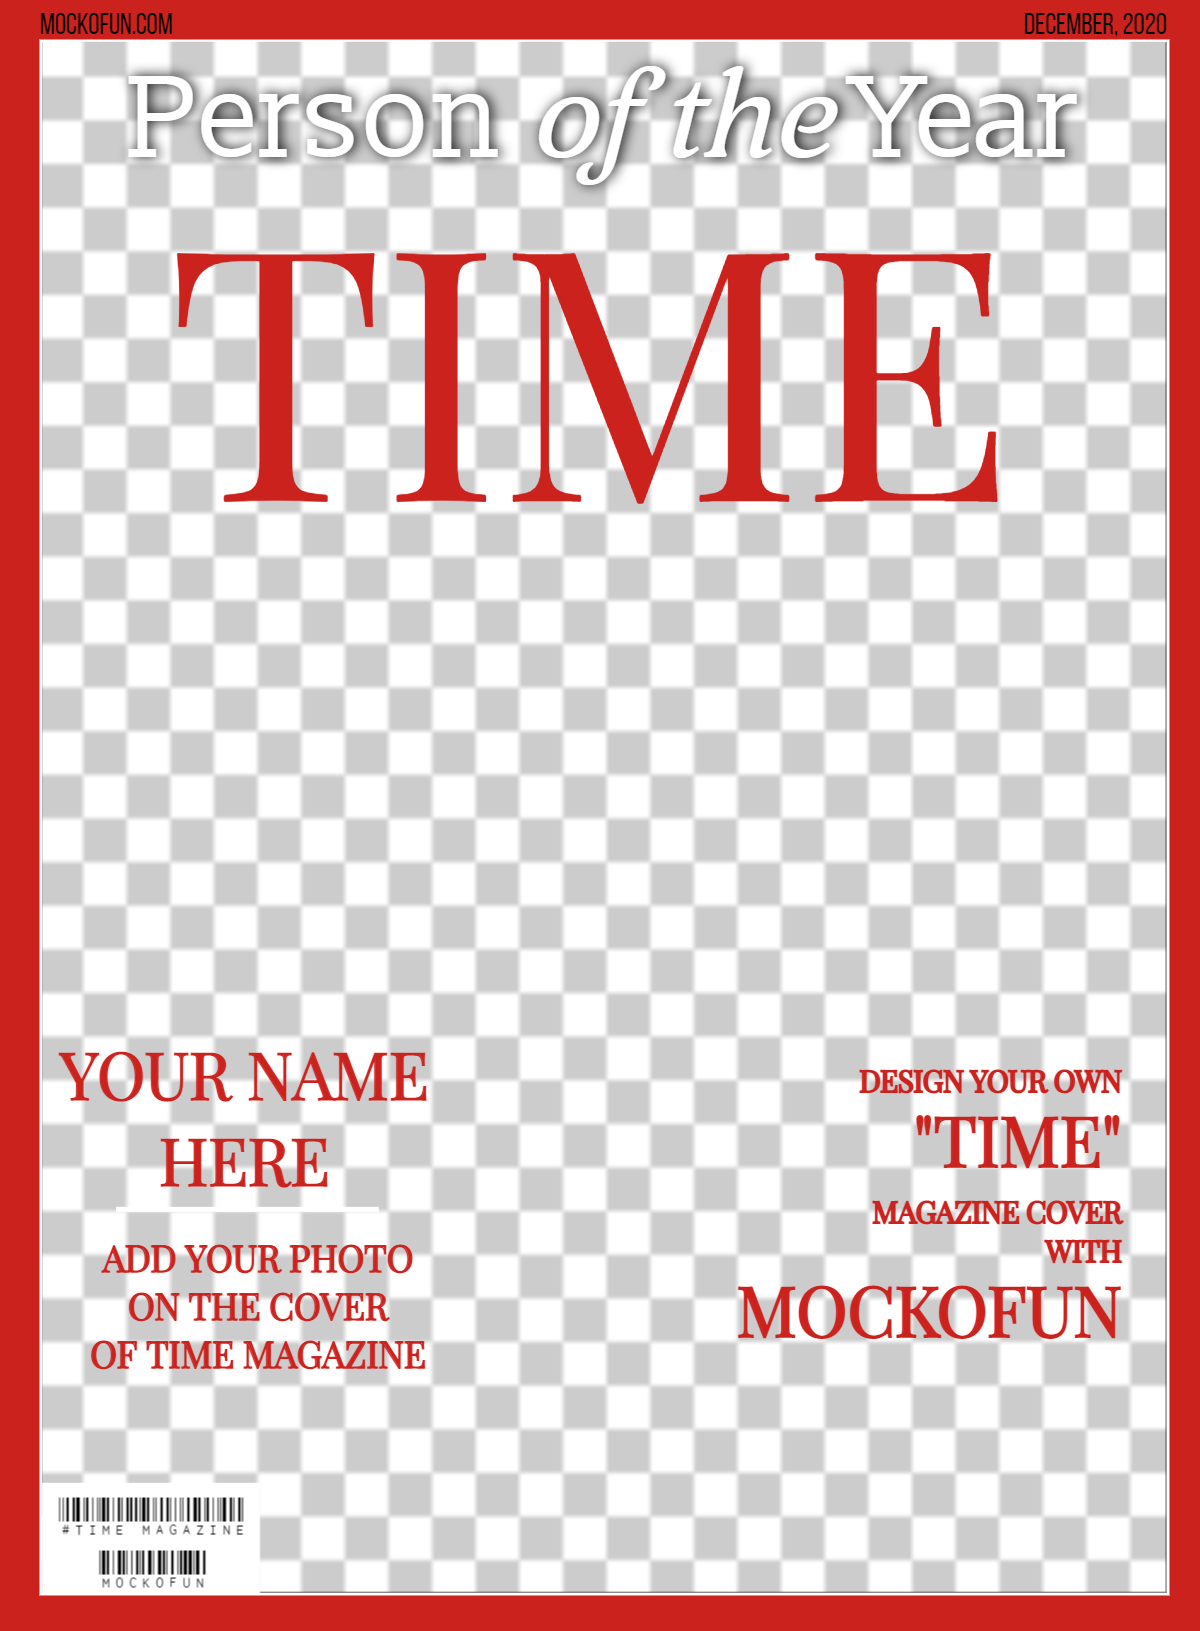 free-time-magazine-cover-template-mockofun